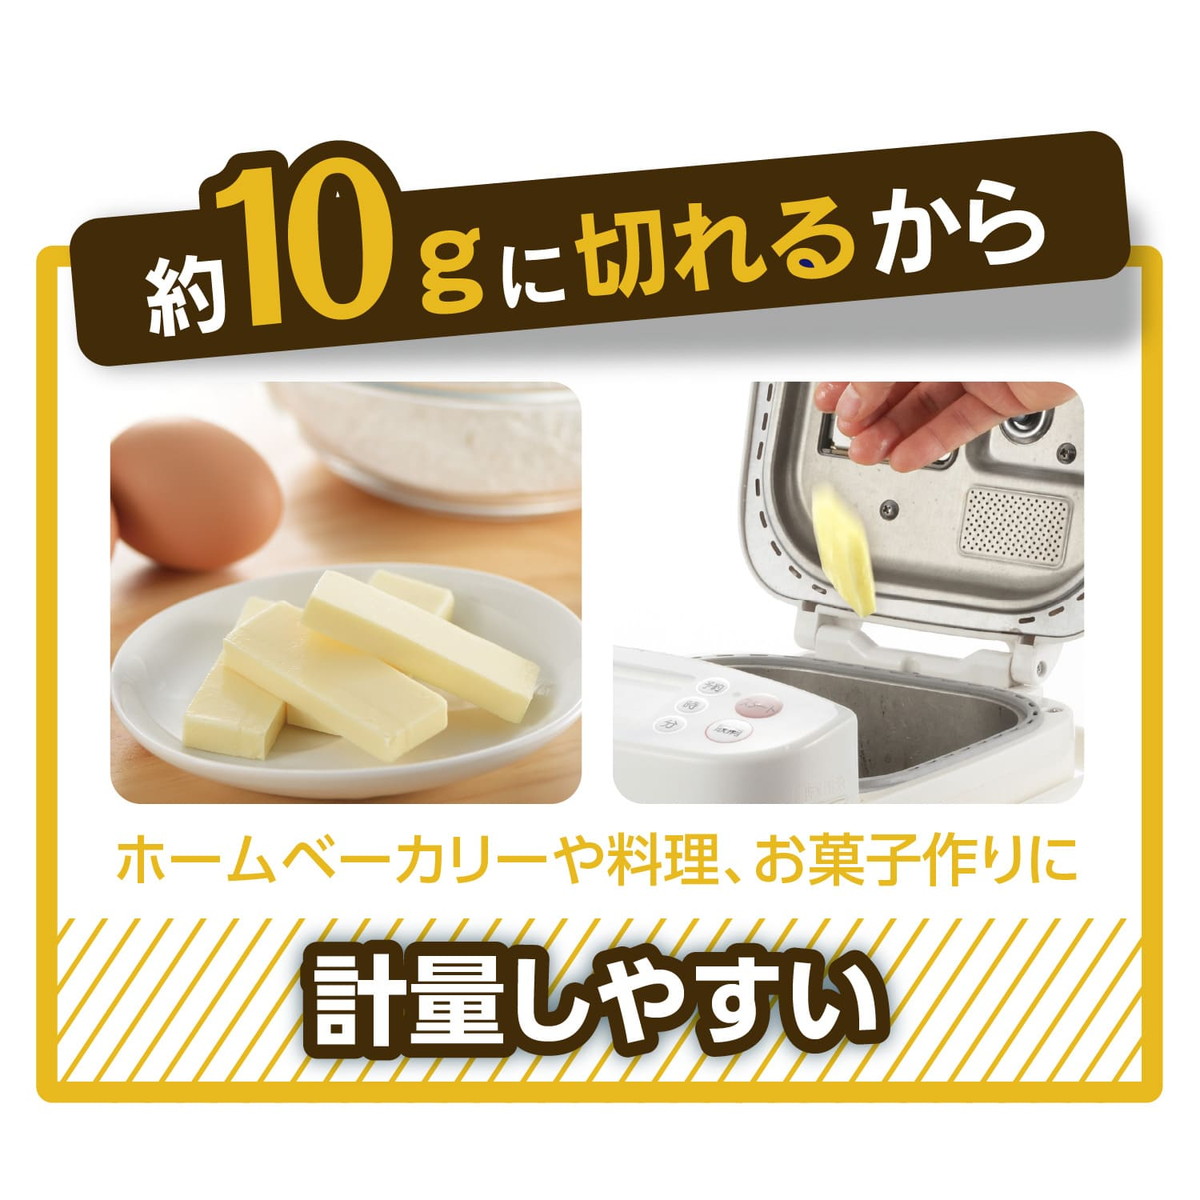 . industry ST-3009 cut ..... pound butter case [AKEBONO akebono ][ free shipping ]